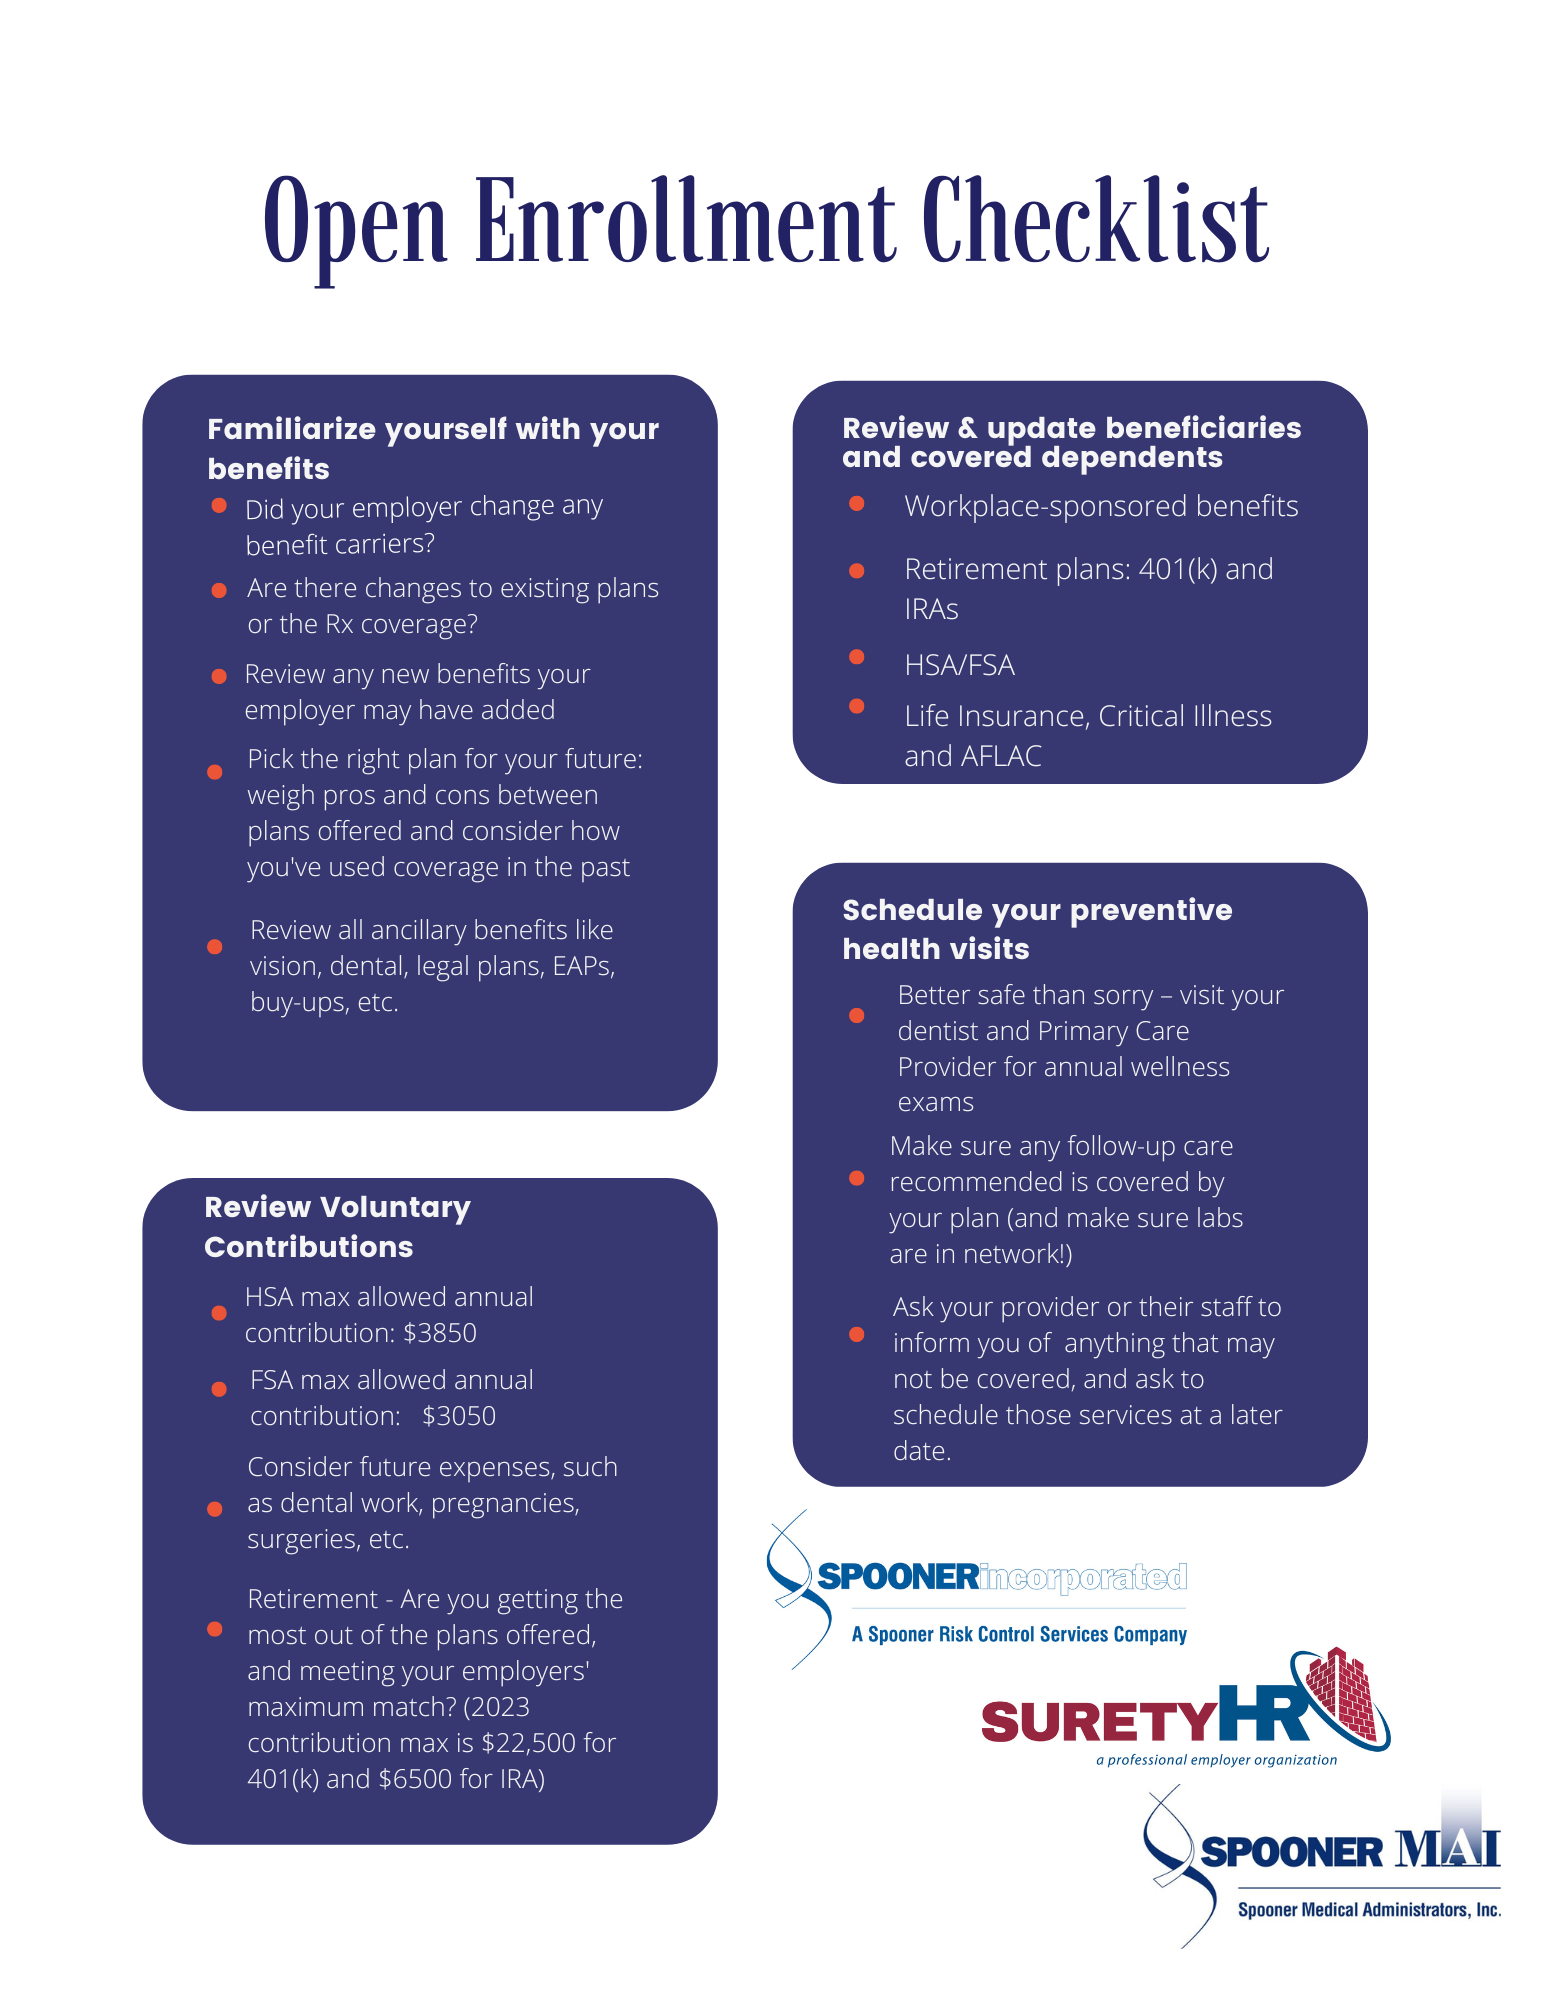 Open Enrollment Checklist for Employees